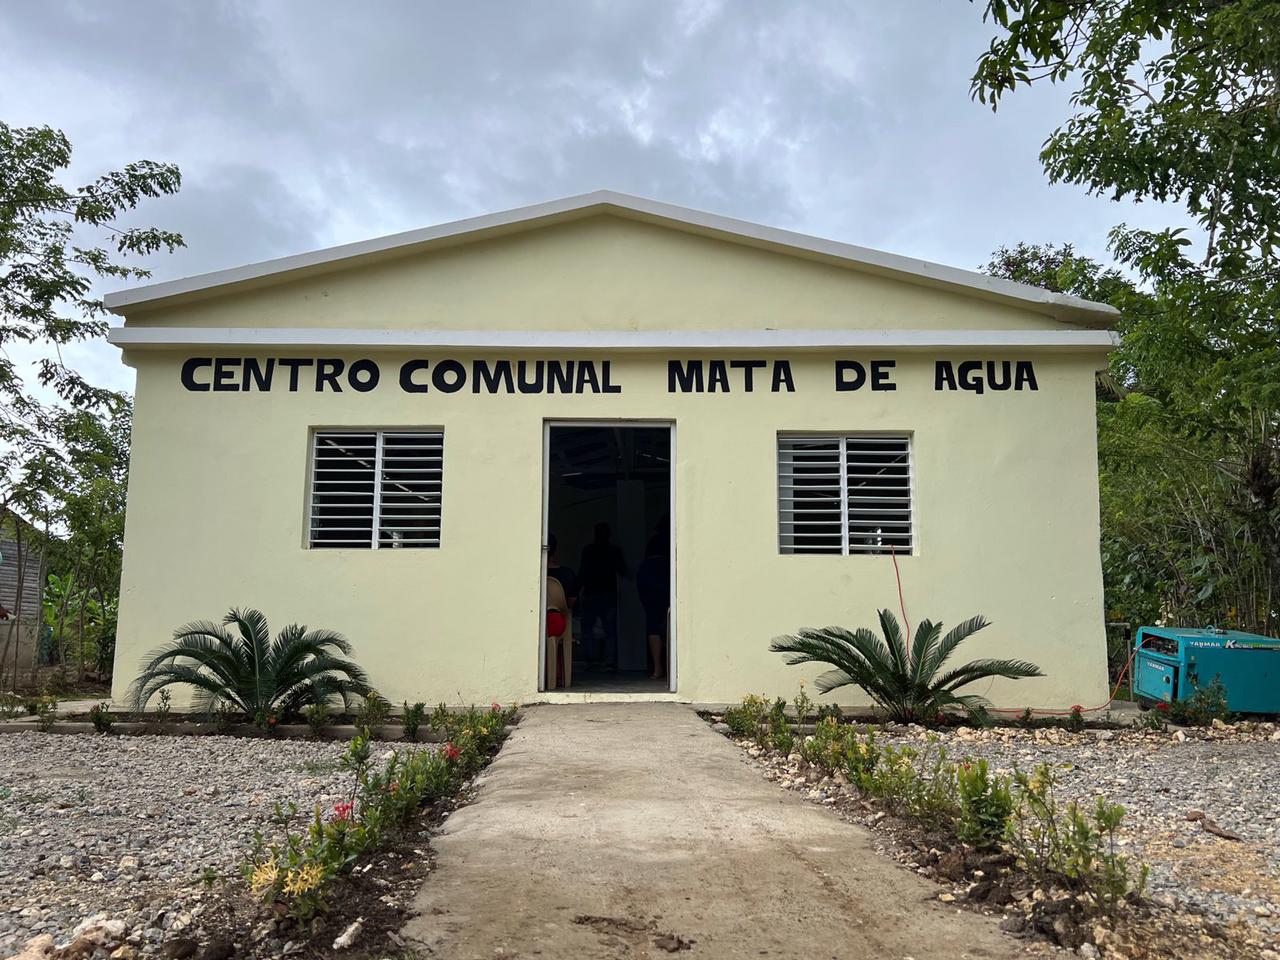 Inauguran centro comunal en la comunidad mata de Agua